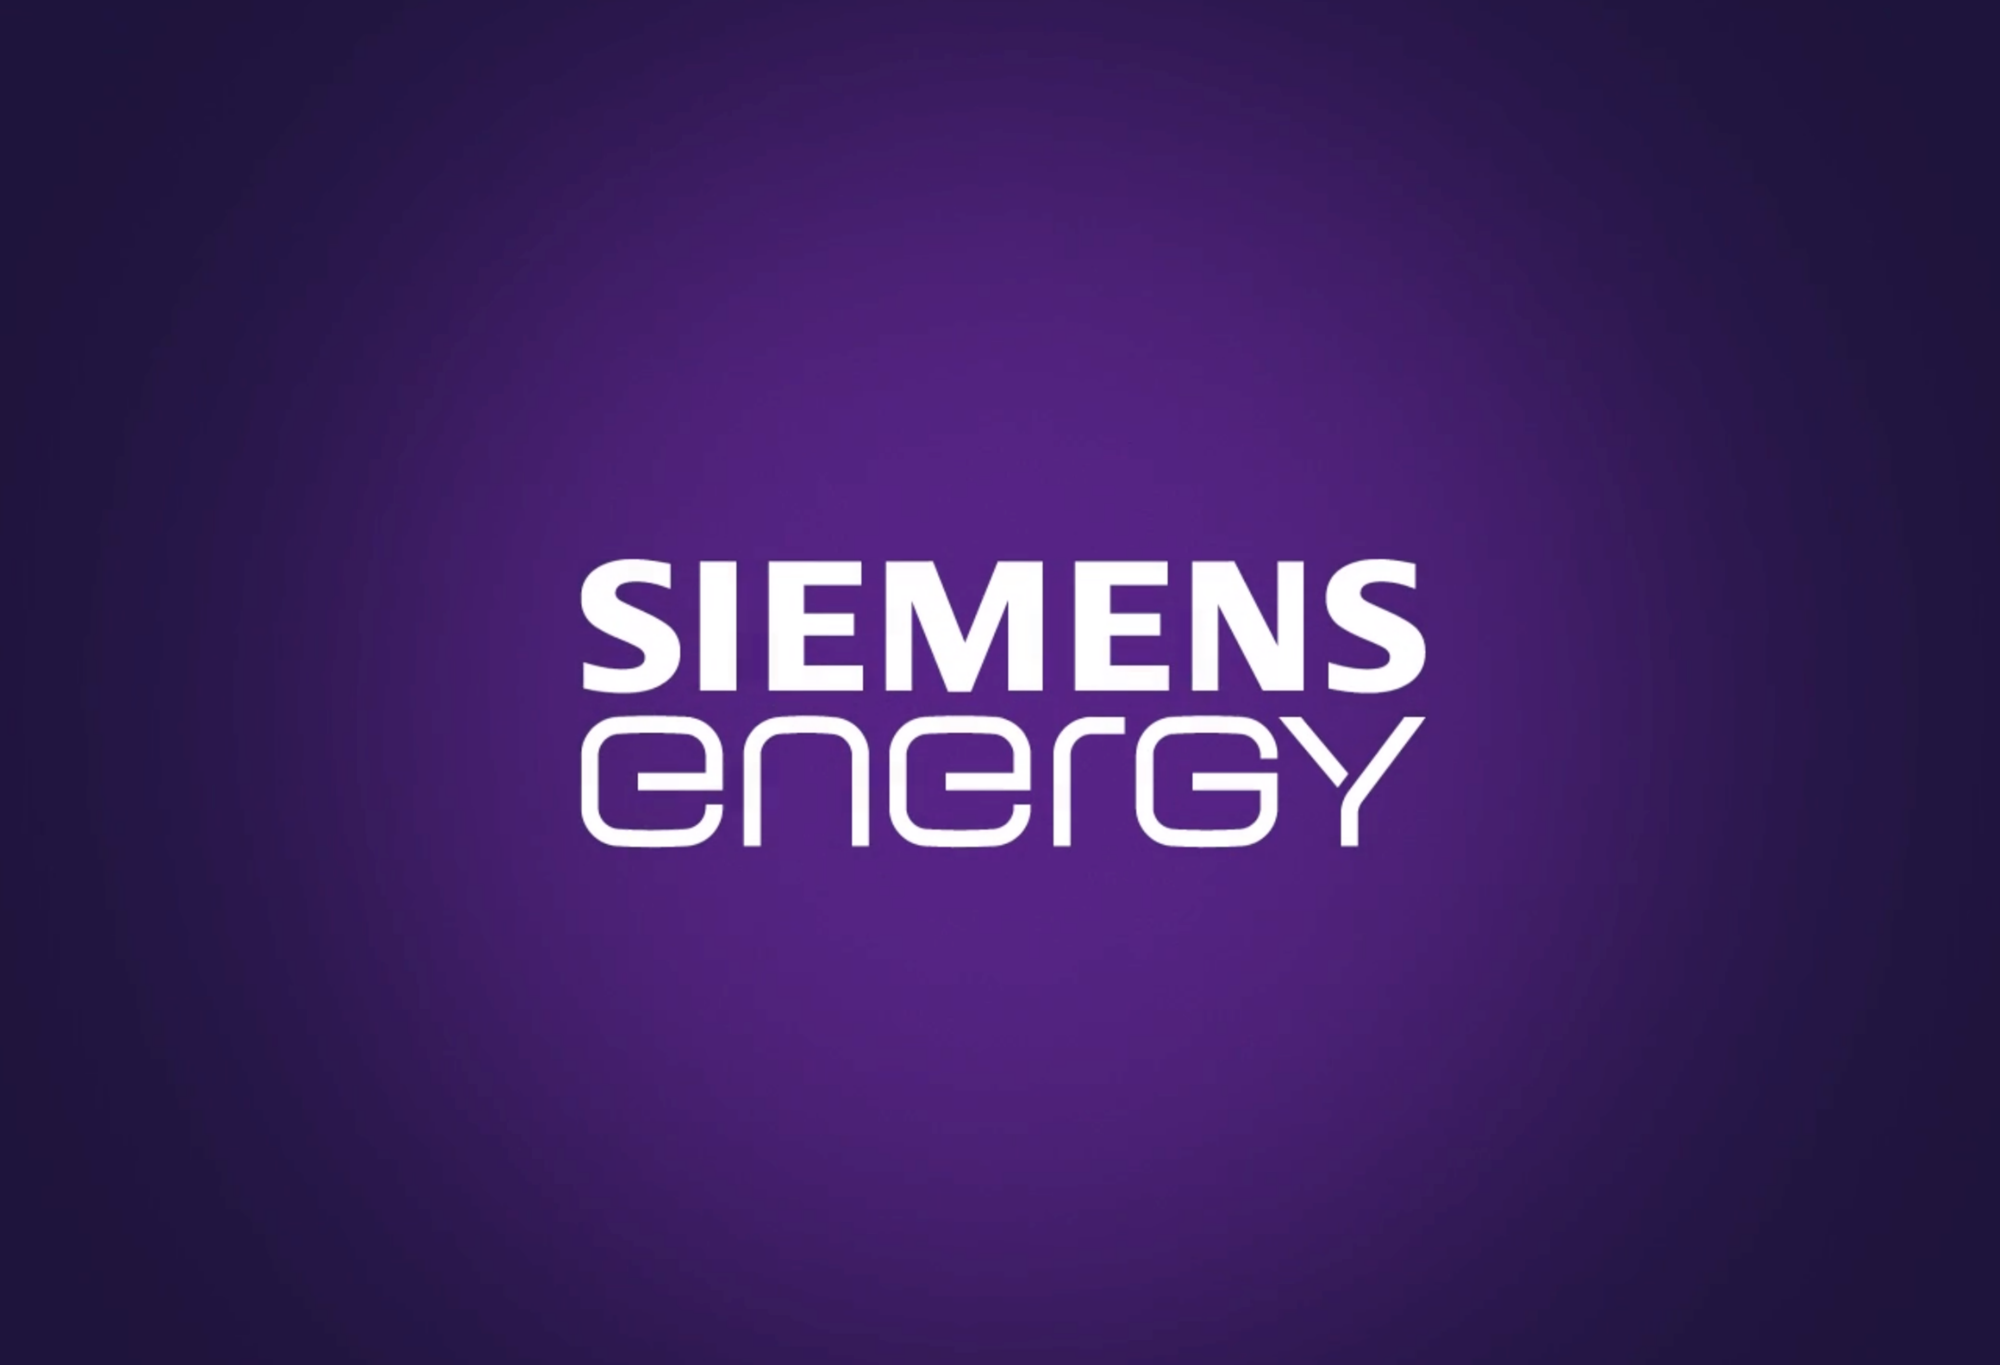 Empresa - Global Energy Brasil